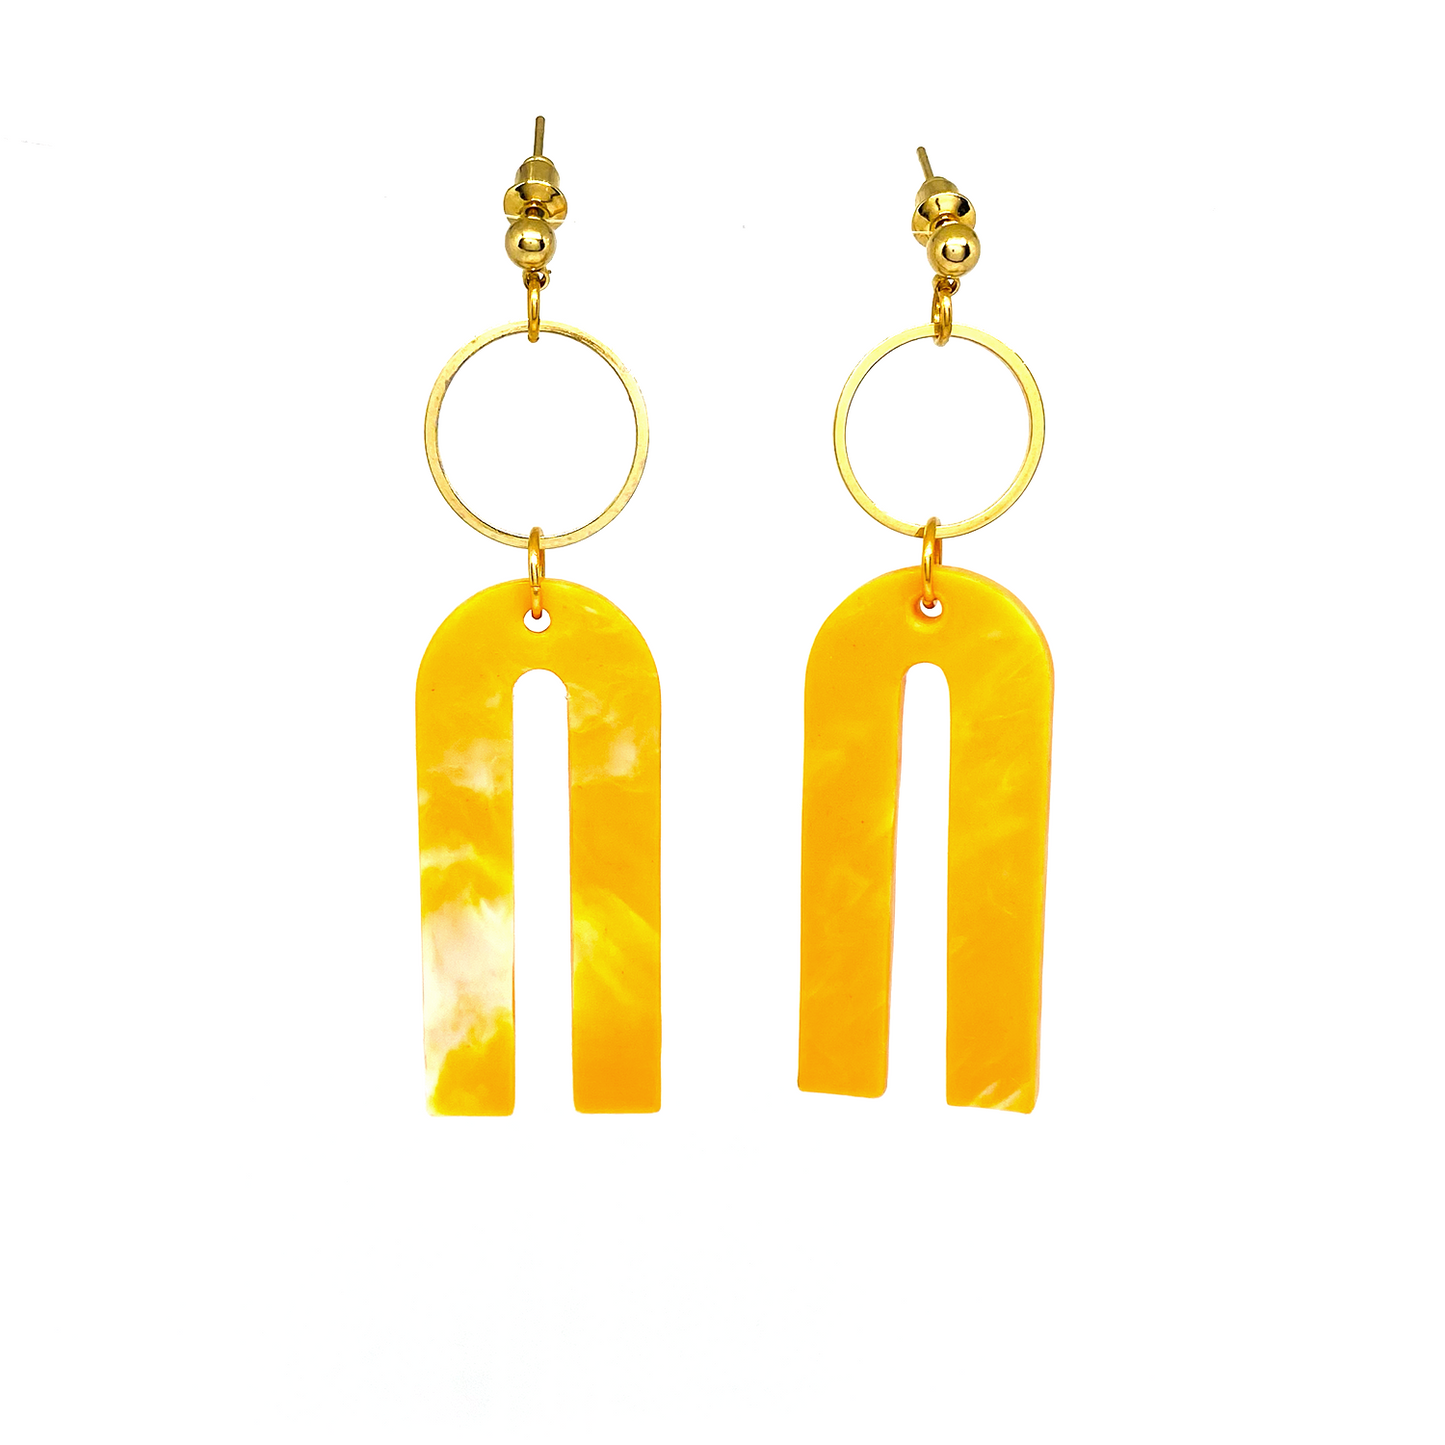 Magneto Earrings (S)- Saffron Yellow